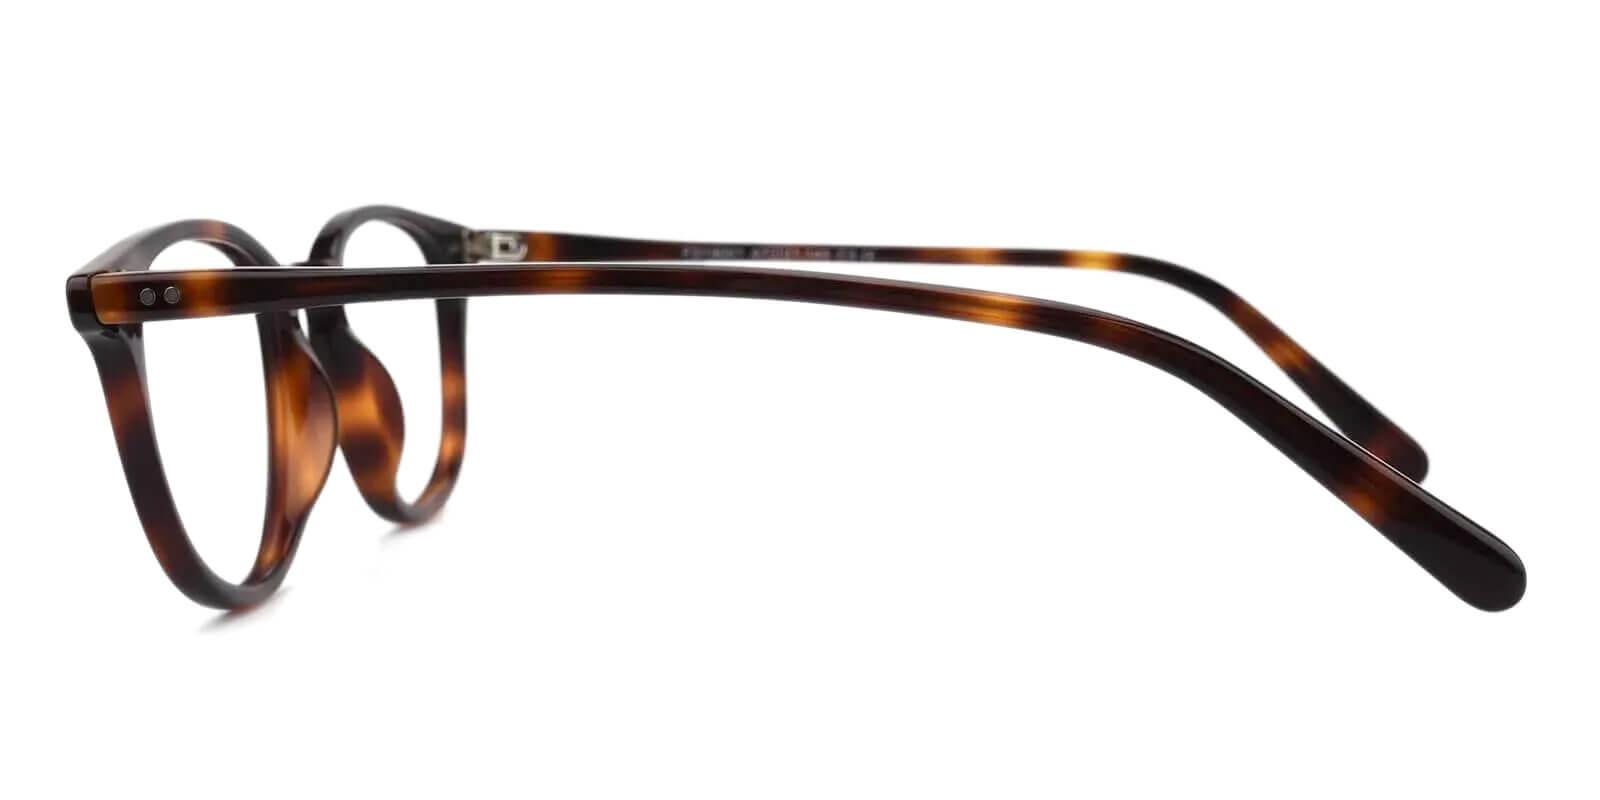 Venus Tortoise Acetate Eyeglasses , UniversalBridgeFit Frames from ABBE Glasses